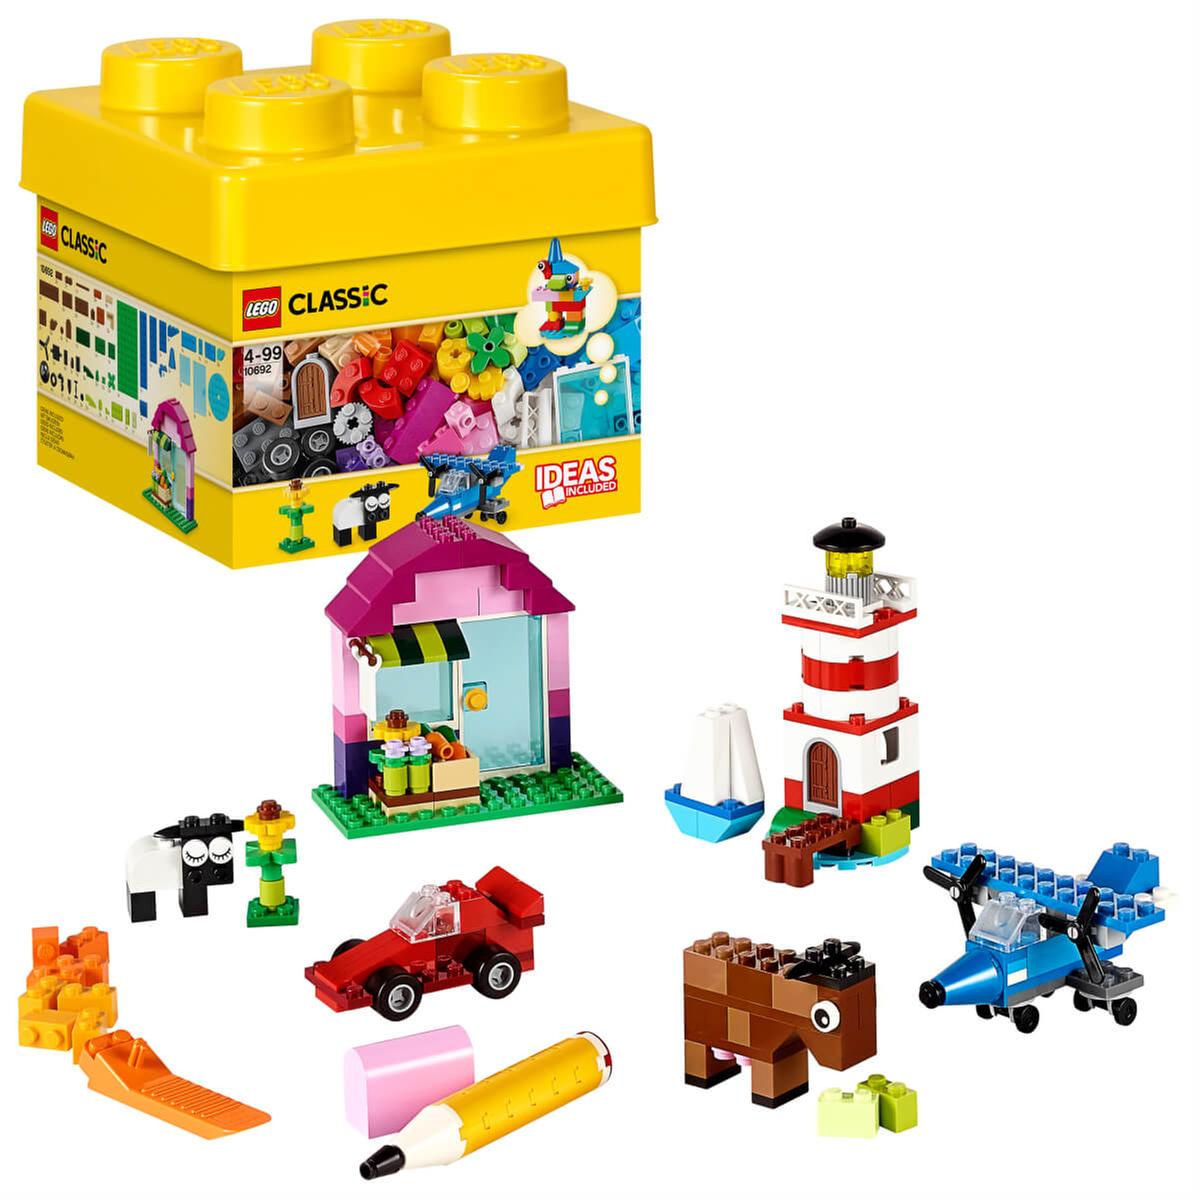 LEGO Classic - Ladrillos Creativos - 10692 | Lego Bloques Y Bases |  Toys"R"Us España